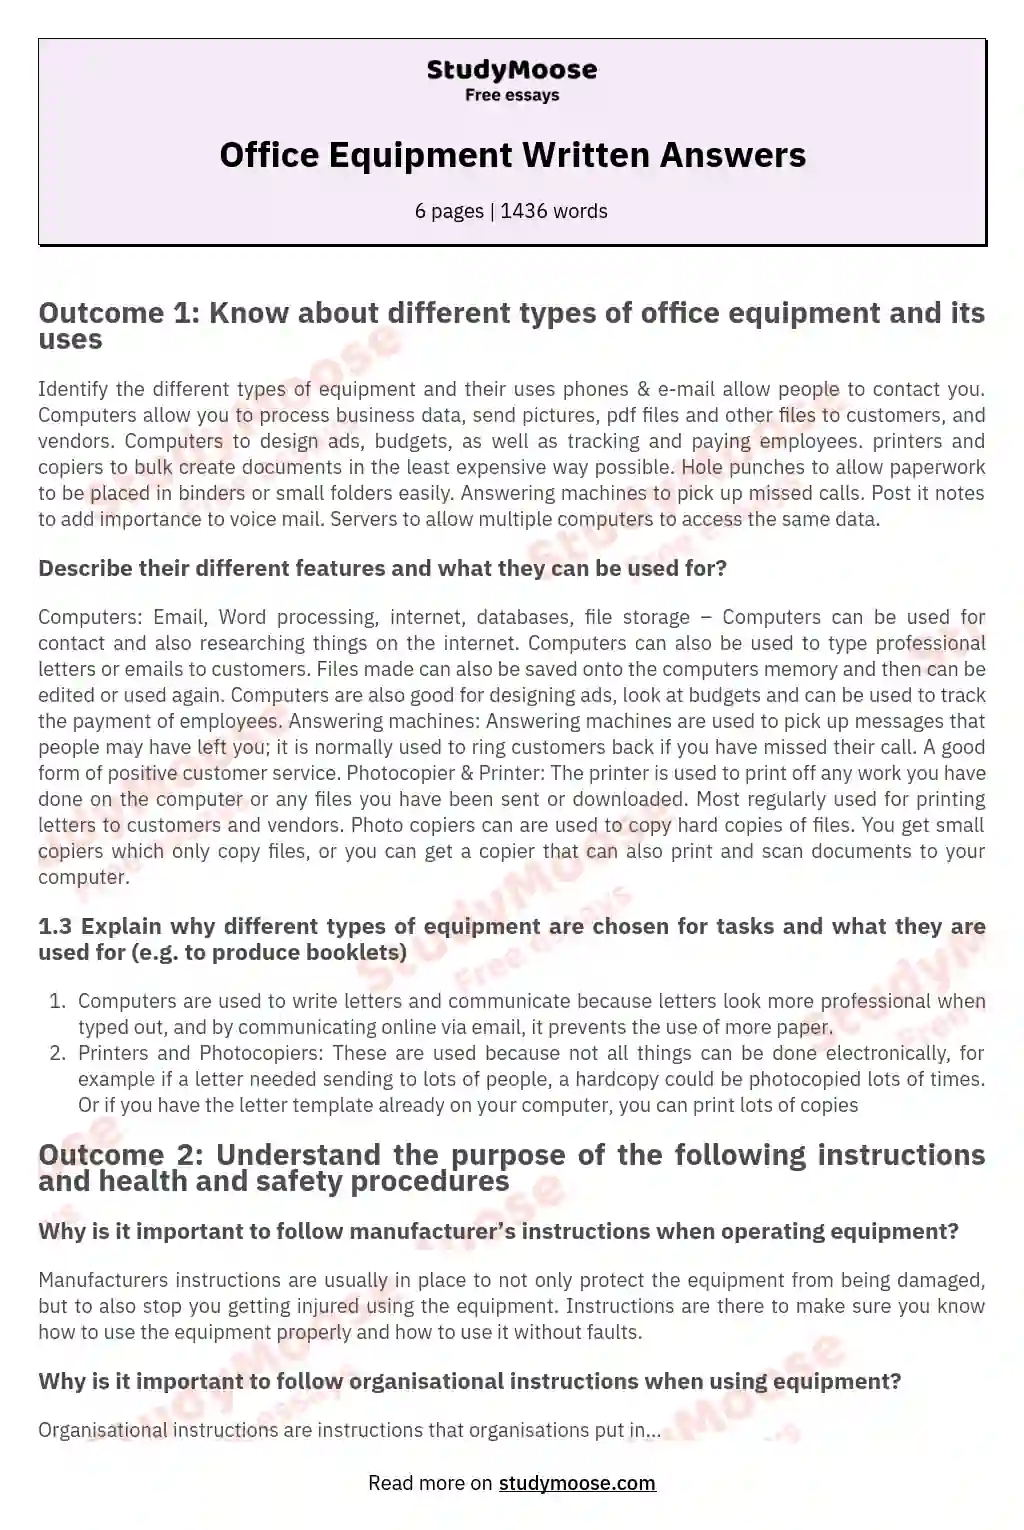 Office Equipment Written Answers essay